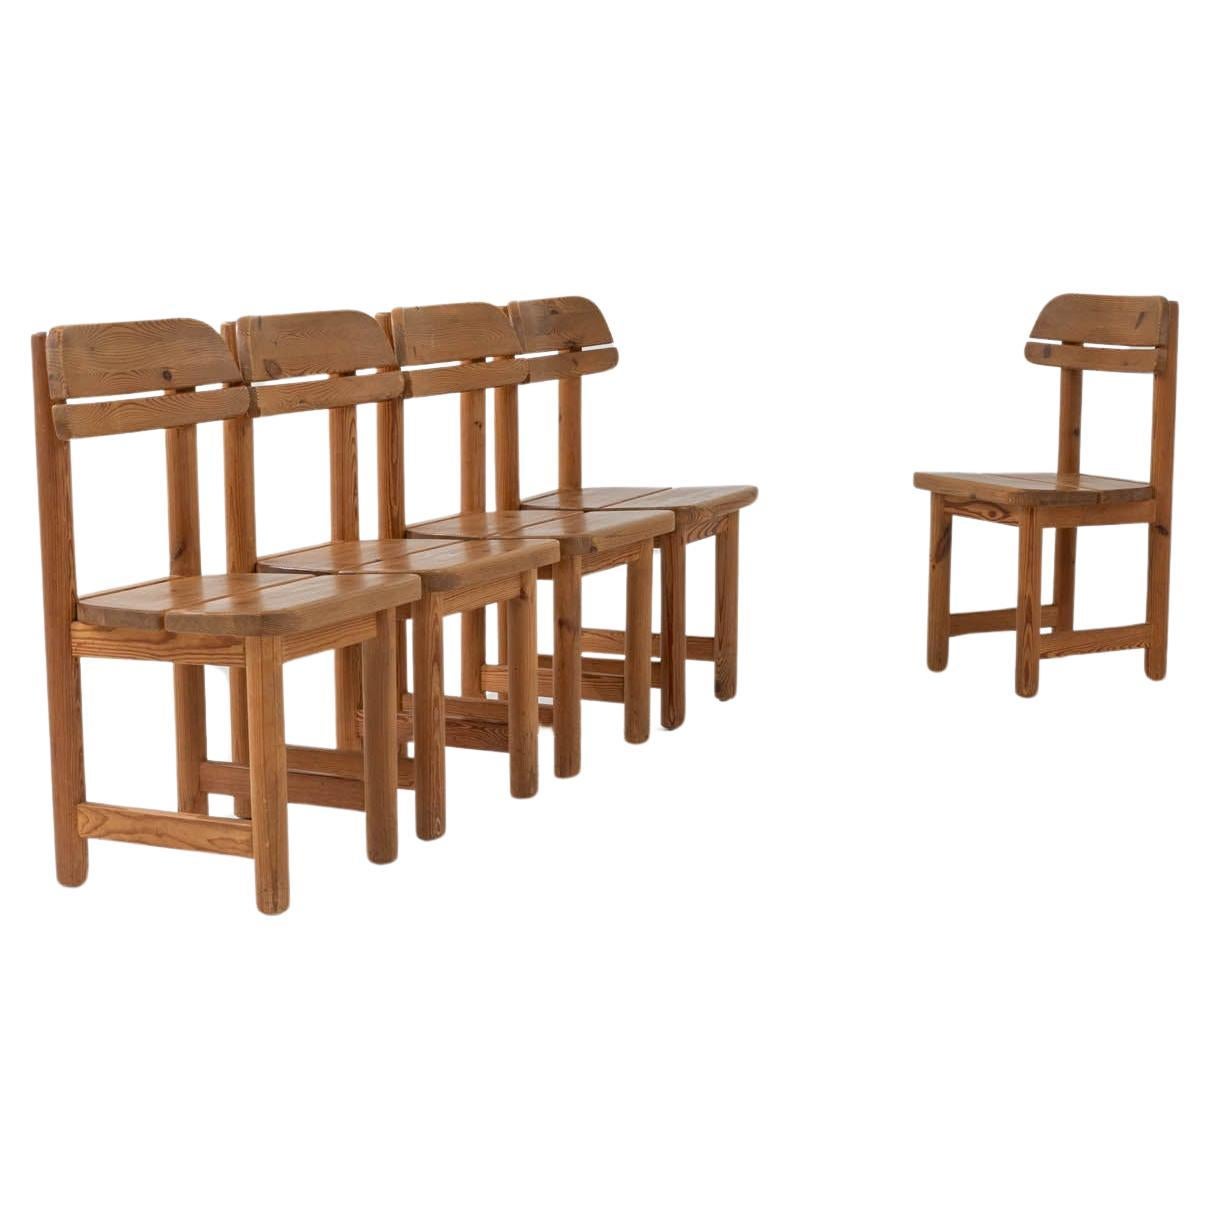 Twentieth Century Danish Wooden Dining Chairs, Set of Five For Sale